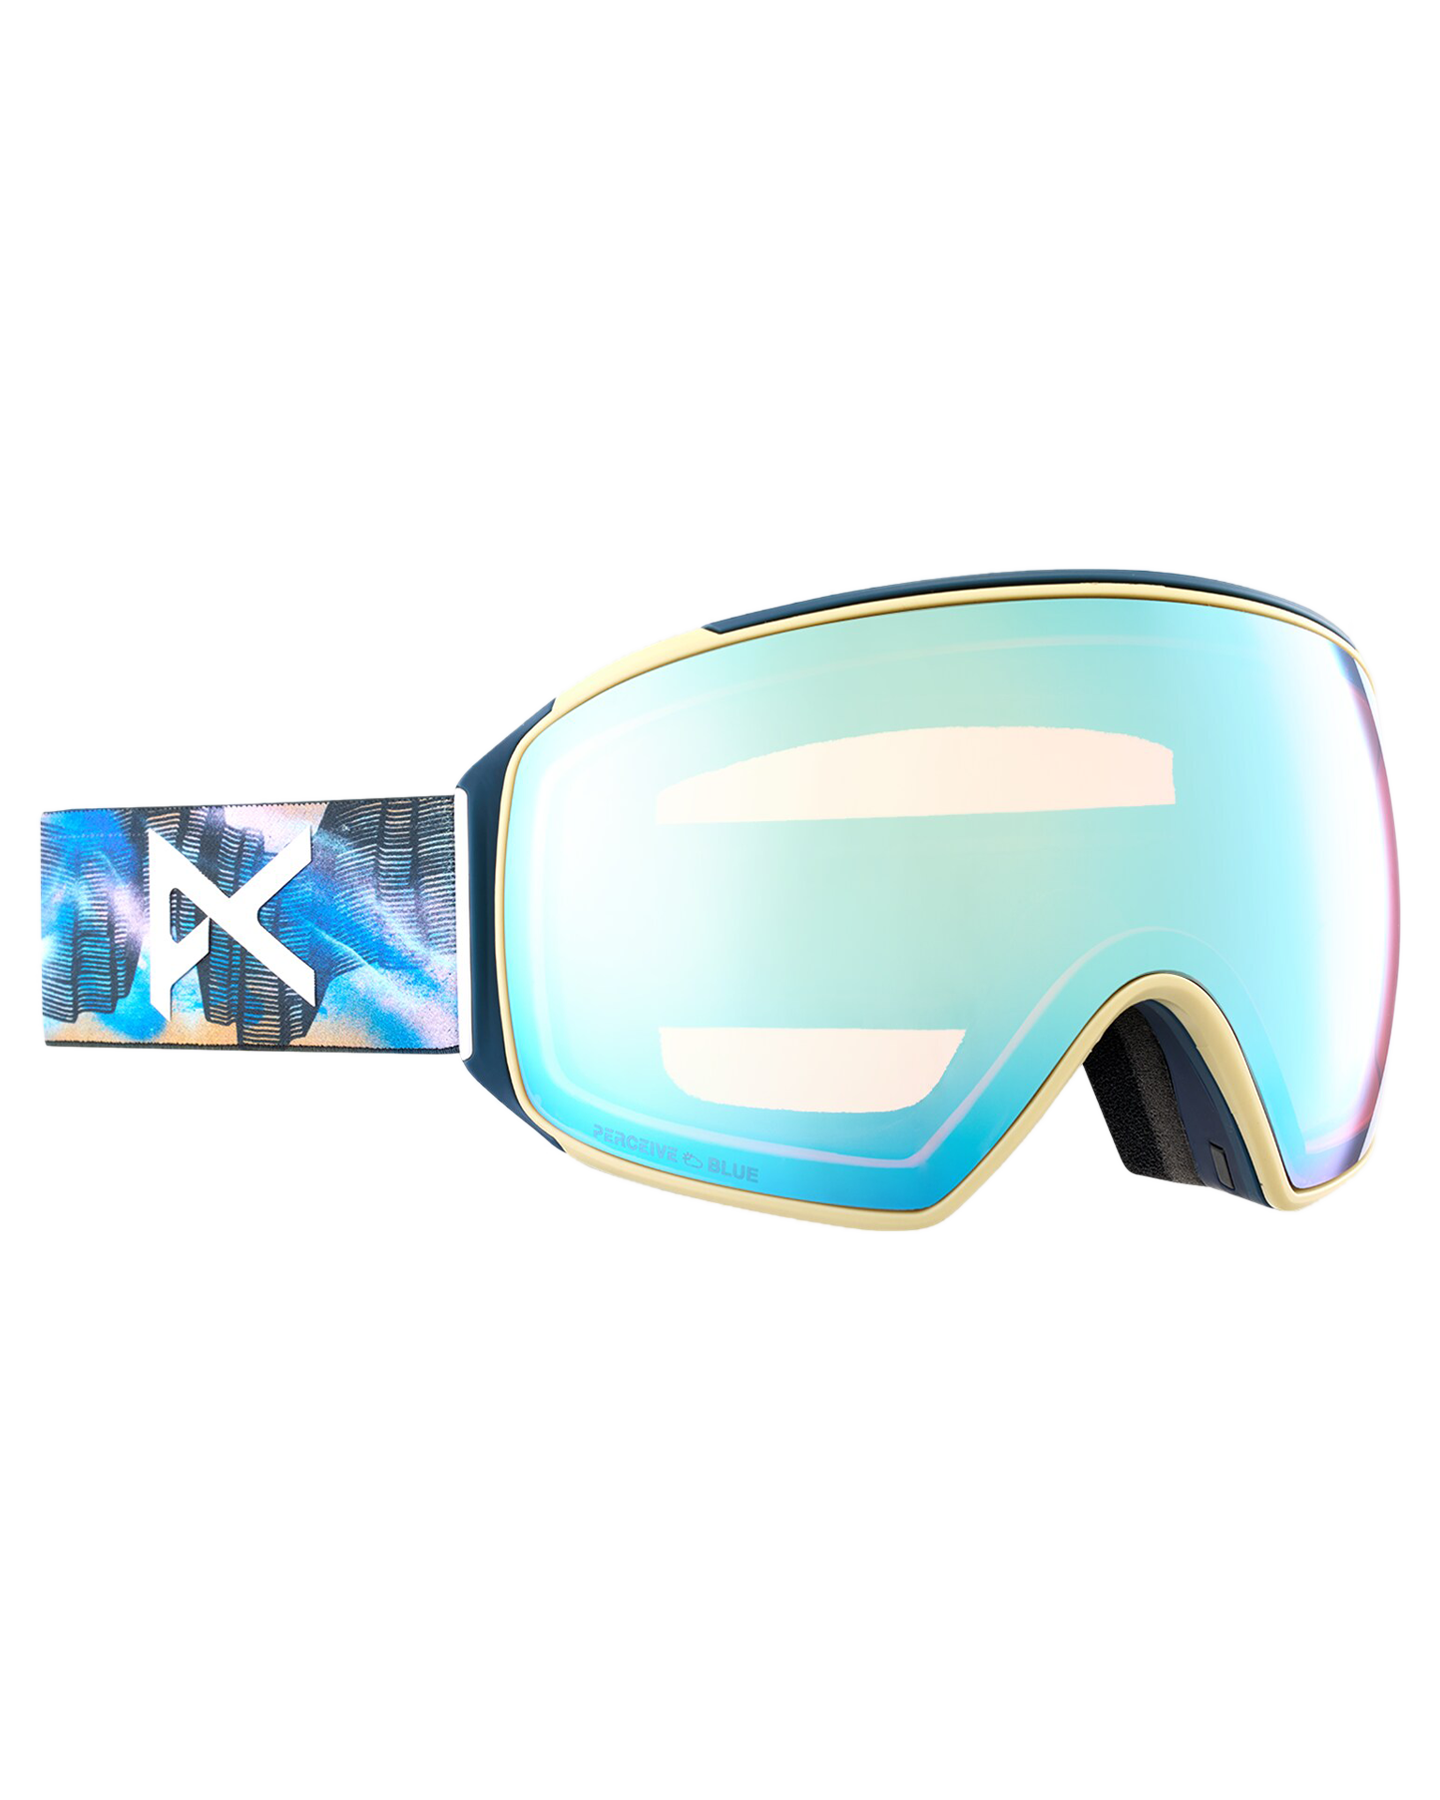 Anon M4 Toric Low Bridge Snow Goggles + Bonus Lens + Mfi® Face Mask - Chet Malinow/Perceive Variable Blue Lens Men's Snow Goggles - Trojan Wake Ski Snow